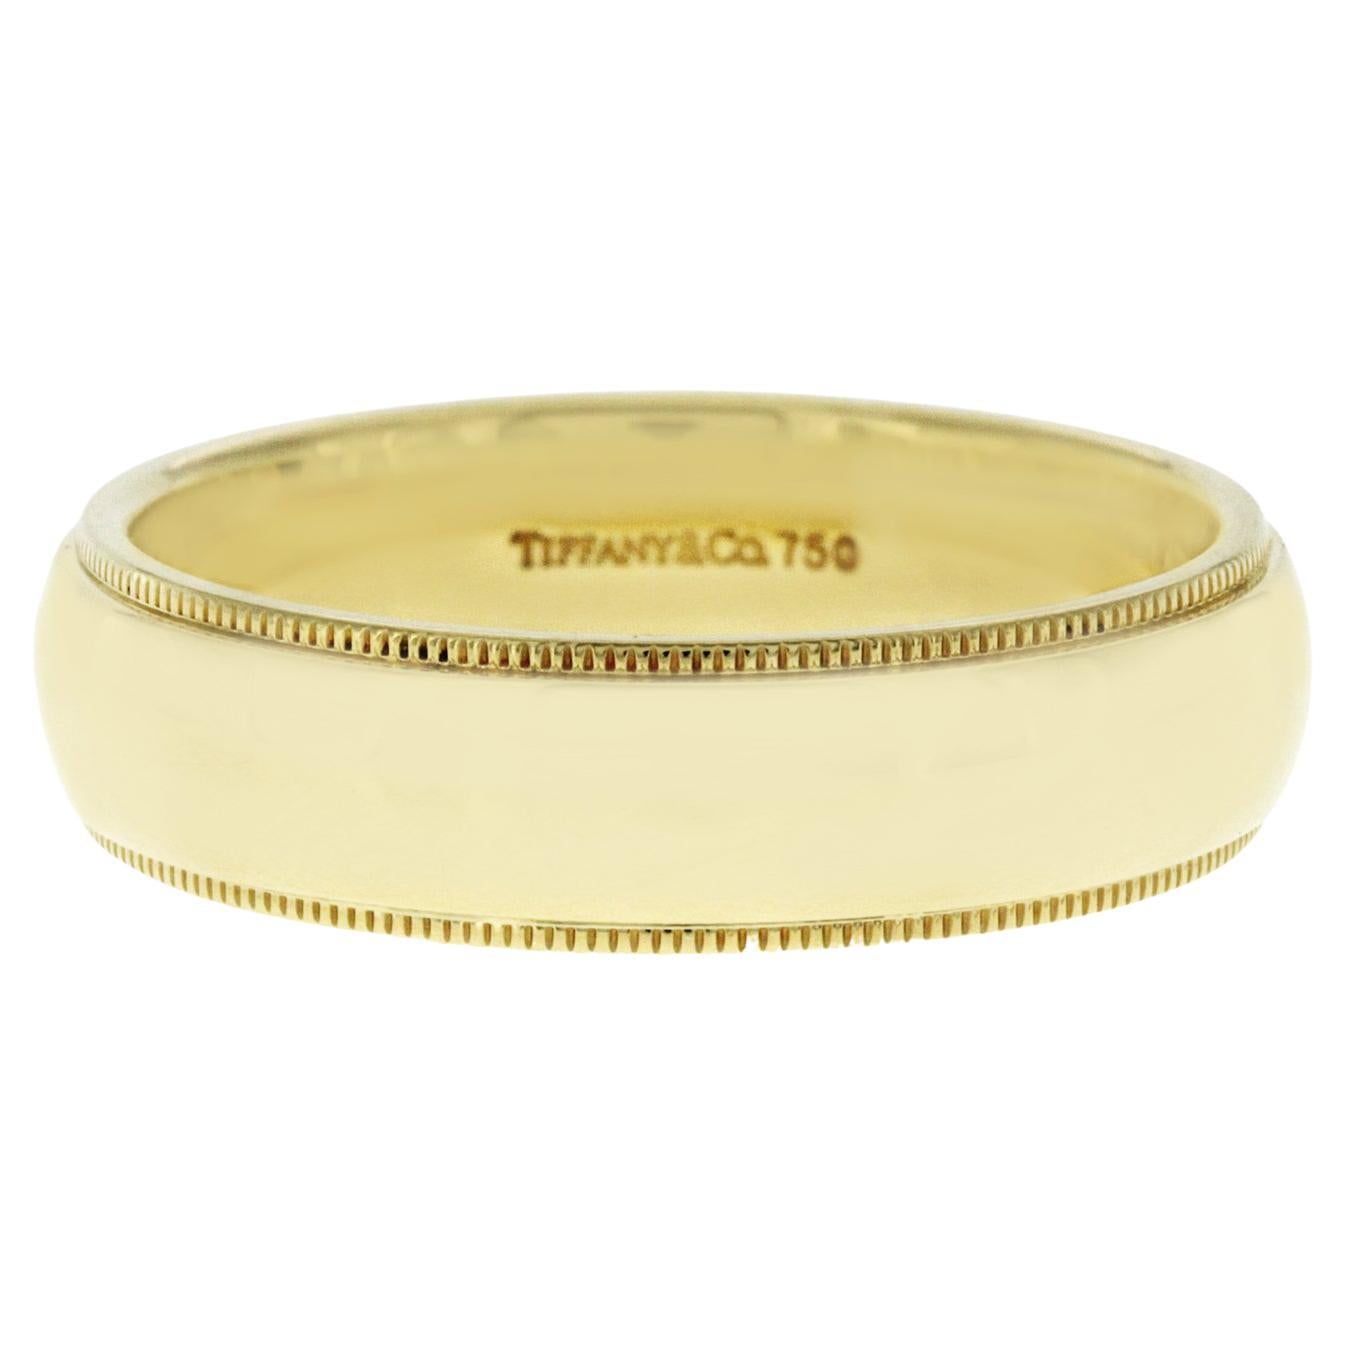 Tiffany & Co. 18K Yellow Gold Milgrain Wedding Band Ring For Sale